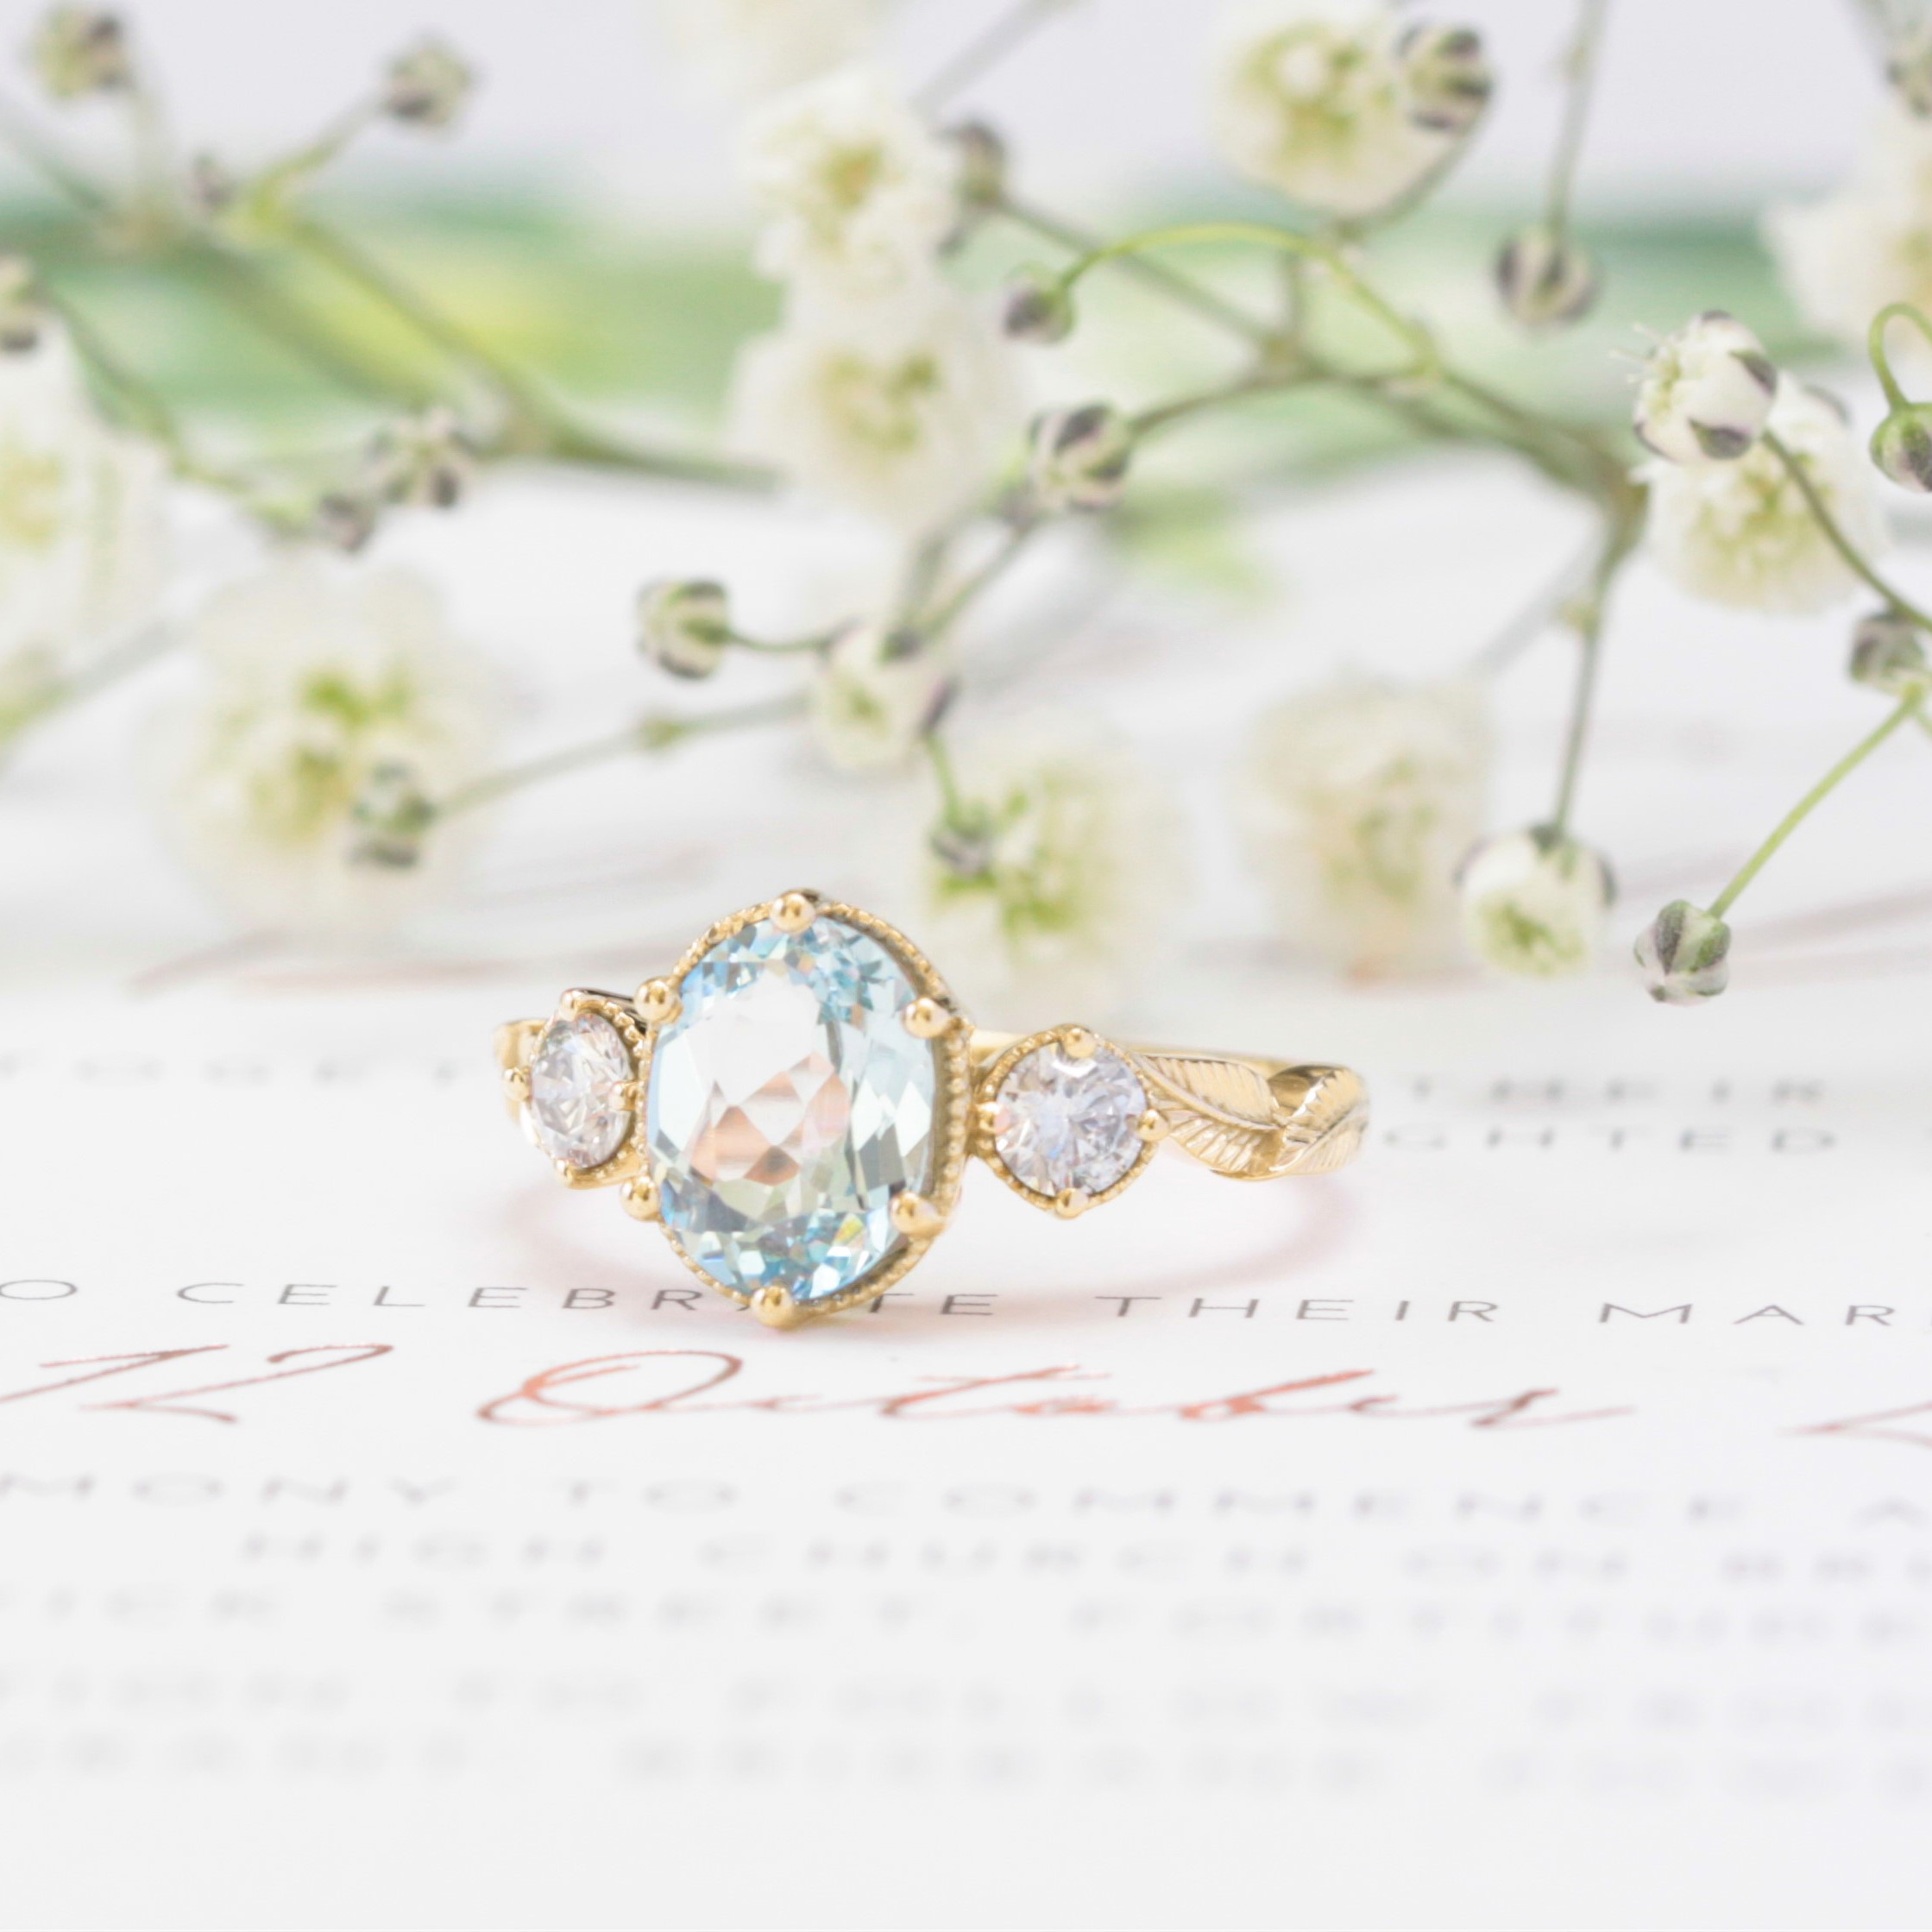 Australian Wedding Ring Designer, Vinny And Charles Jewellery, Unique Wedding Rings, Natural Gemstone Rings, UK Wedding Rings